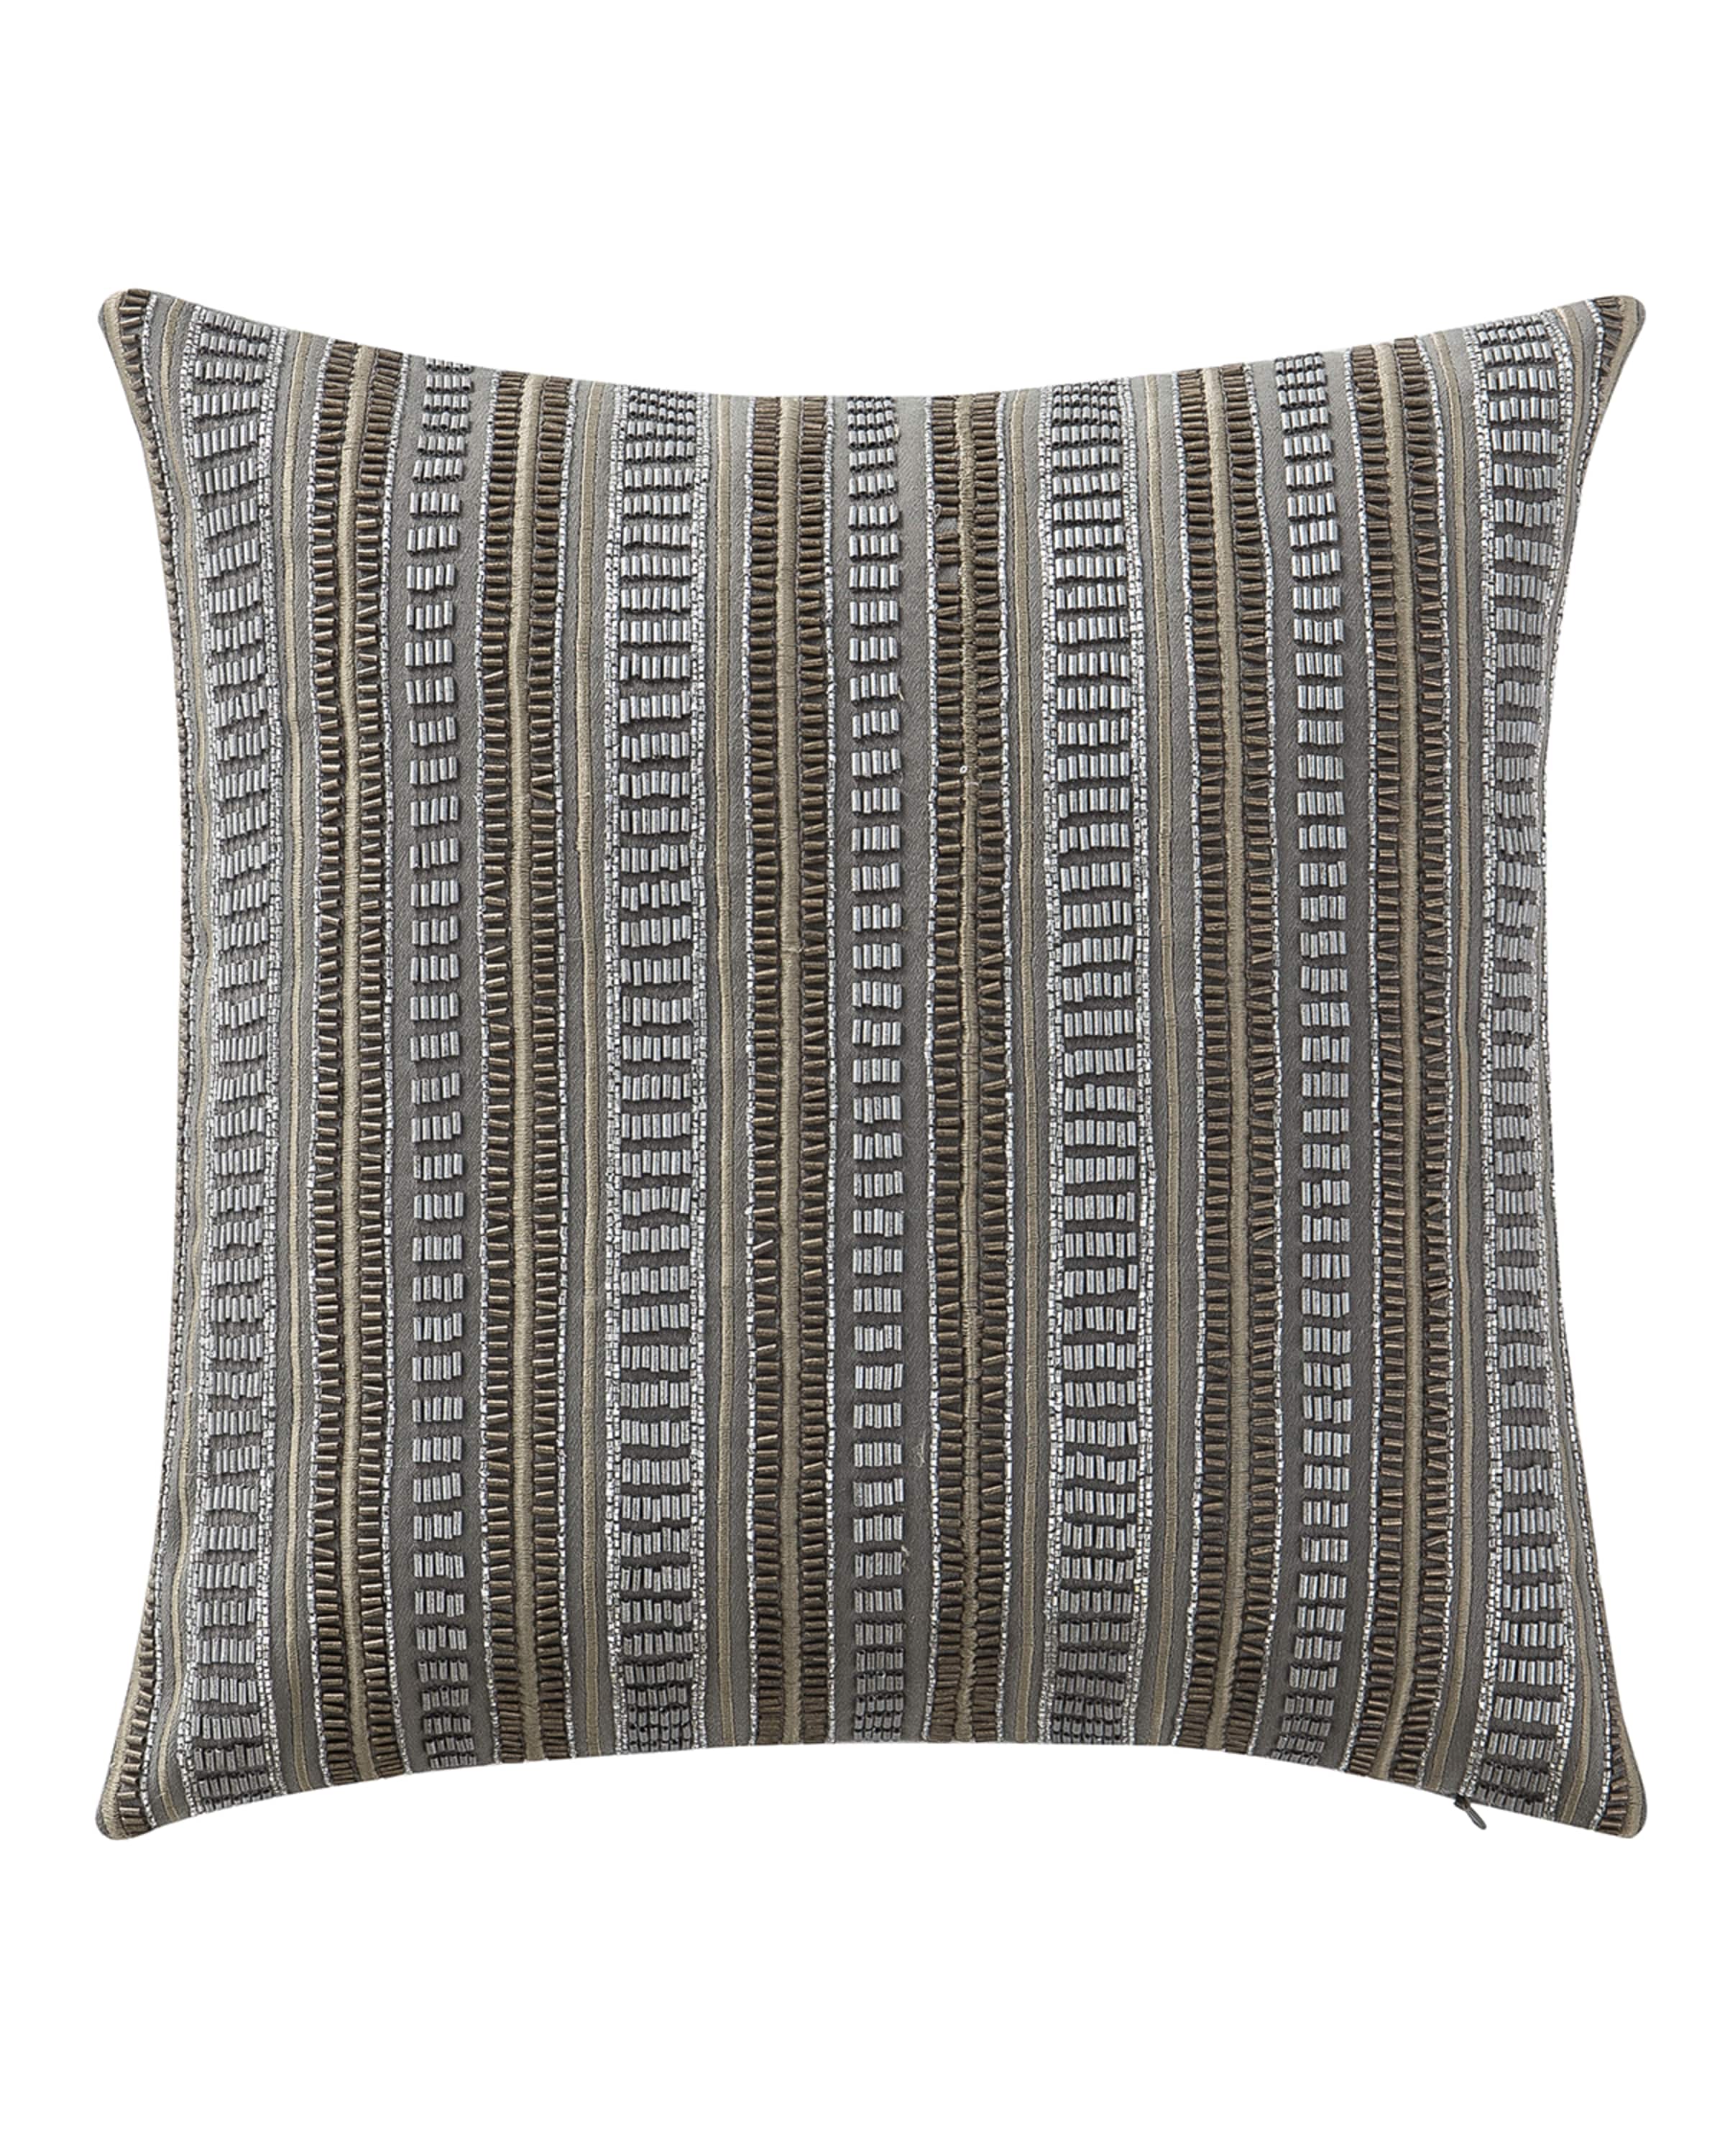 Waterford Carrick 14x14 Decorative Pillow